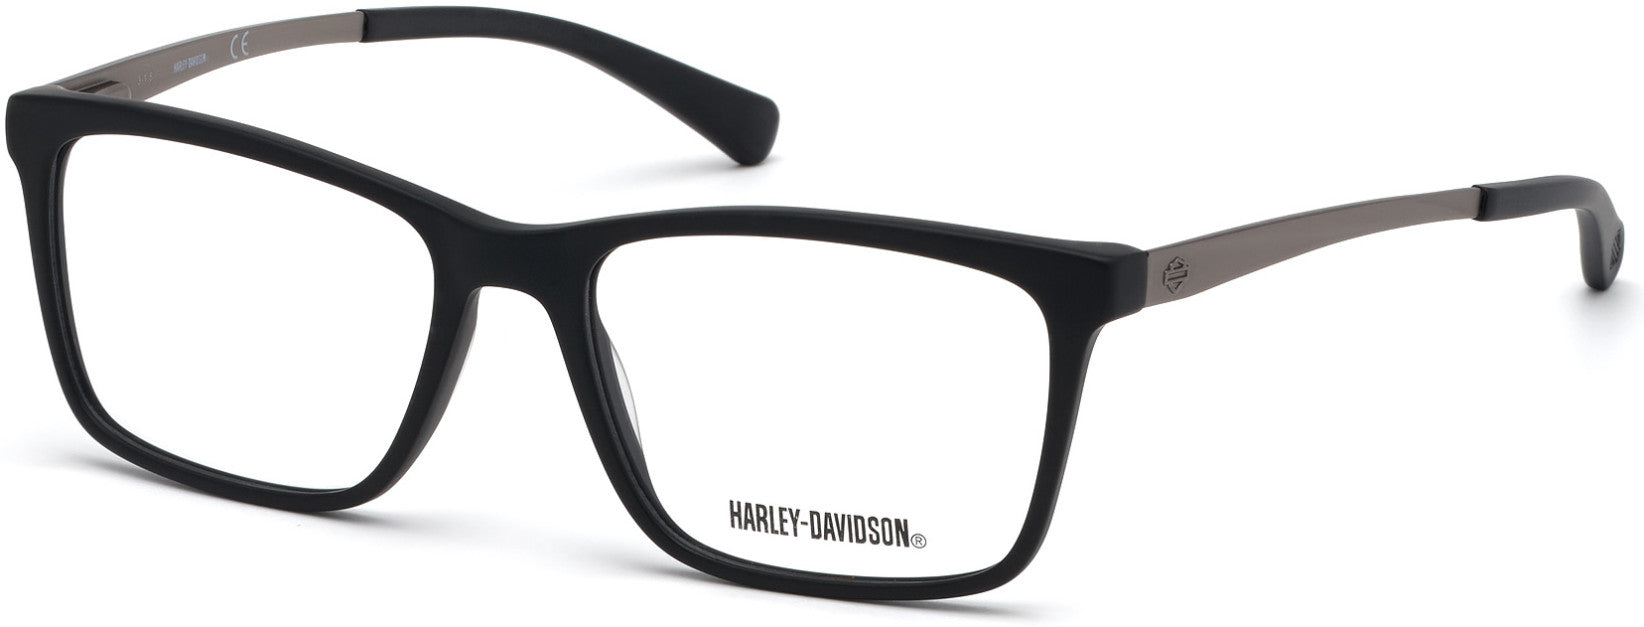 Harley-Davidson HD0779 Geometric Eyeglasses 002-002 - Matte Black